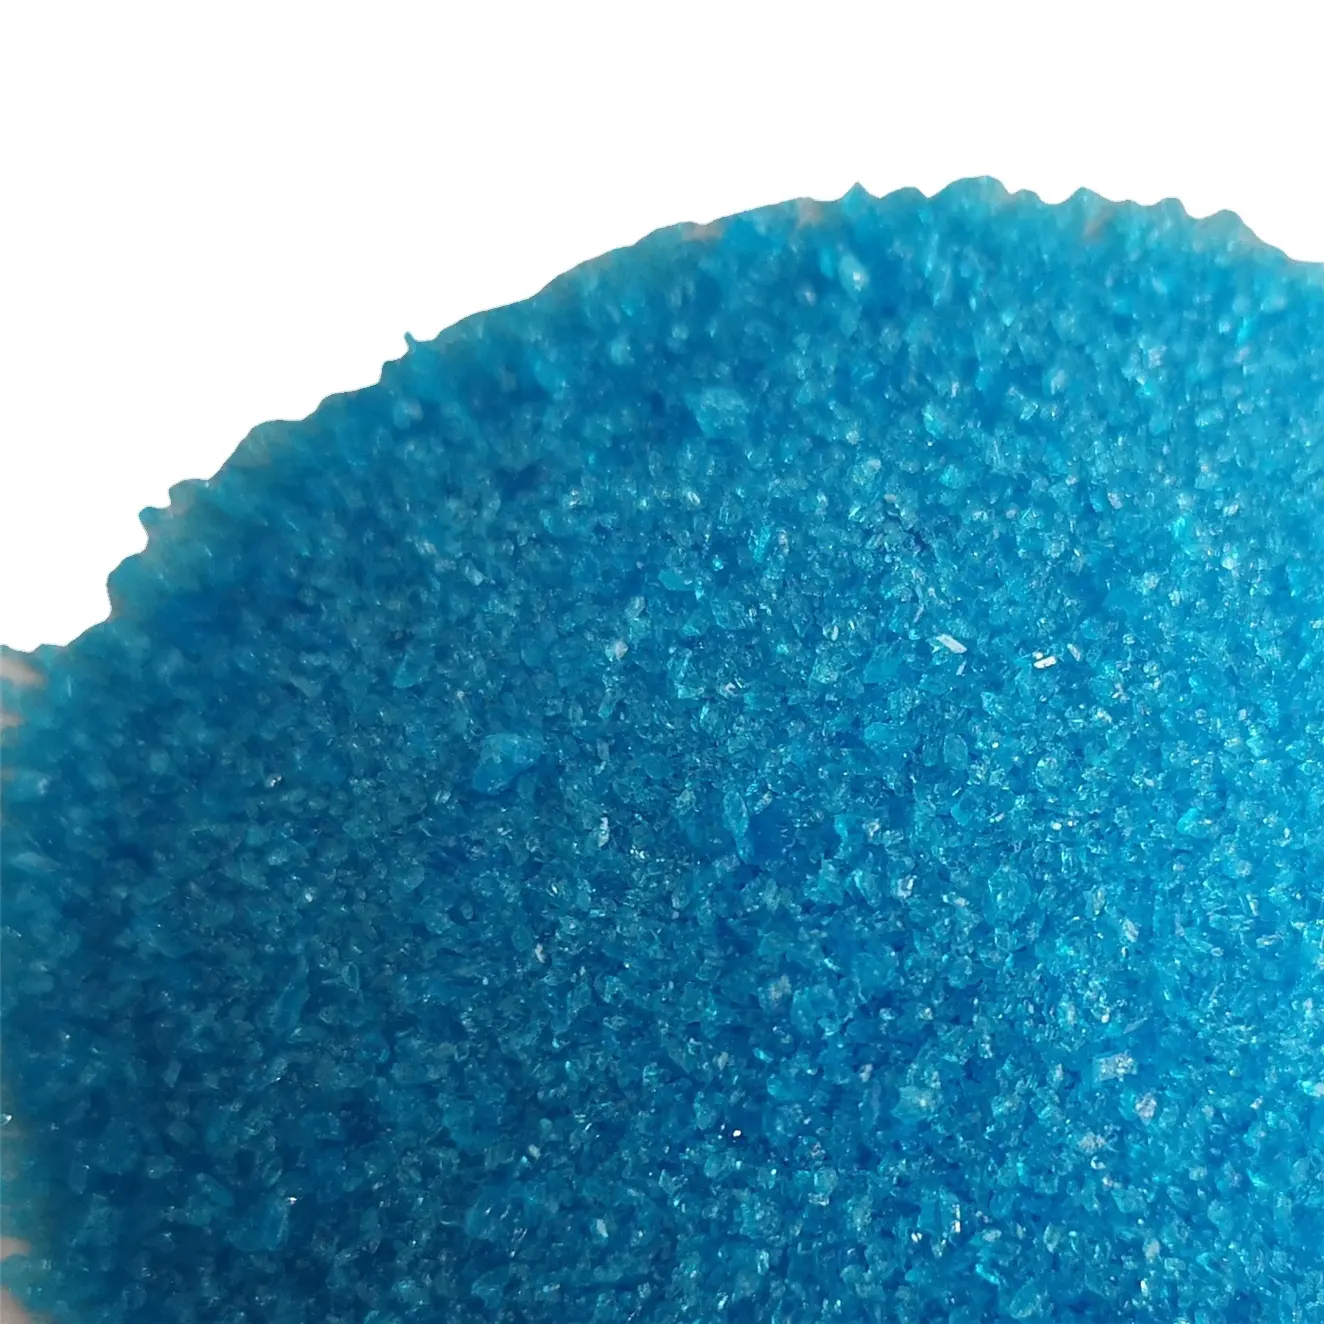 Detergent Blue Crystal Granular Fertilizer CuSO4 CAS 7758-99-8 copper sulphate 98%